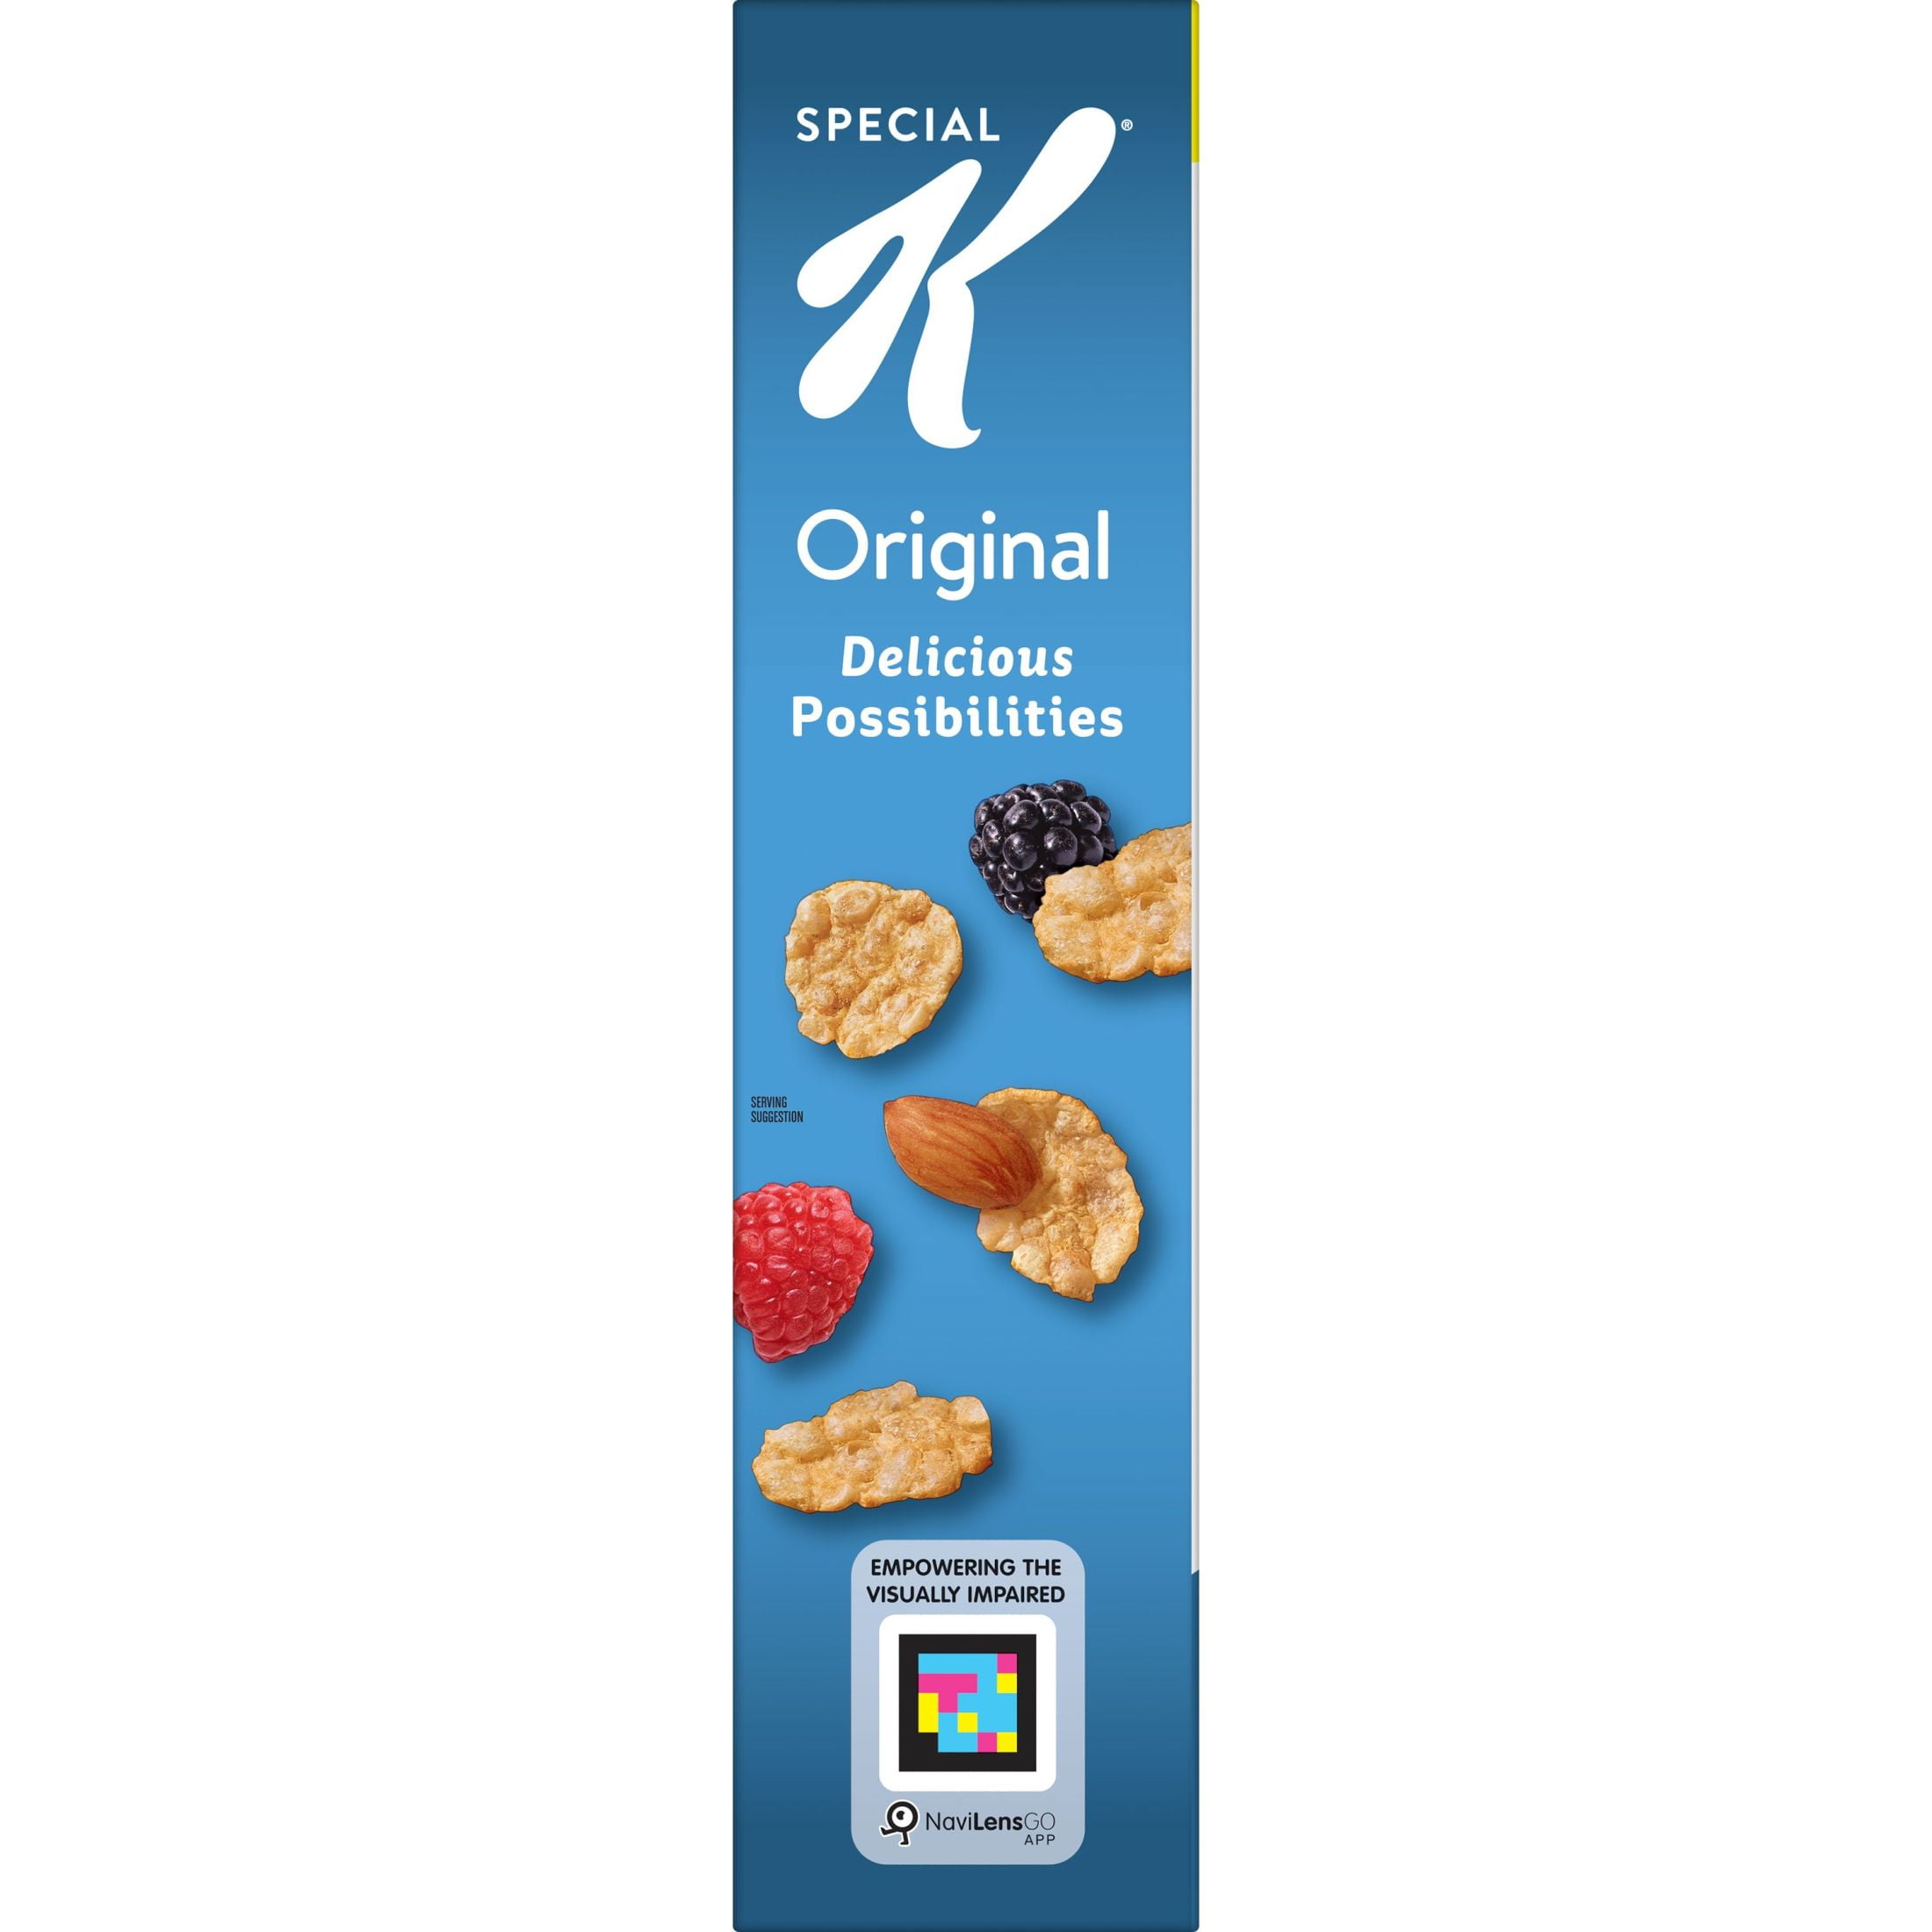 Kellogg's Special K Original Cold Breakfast Cereal, 9.6 oz - Fairway